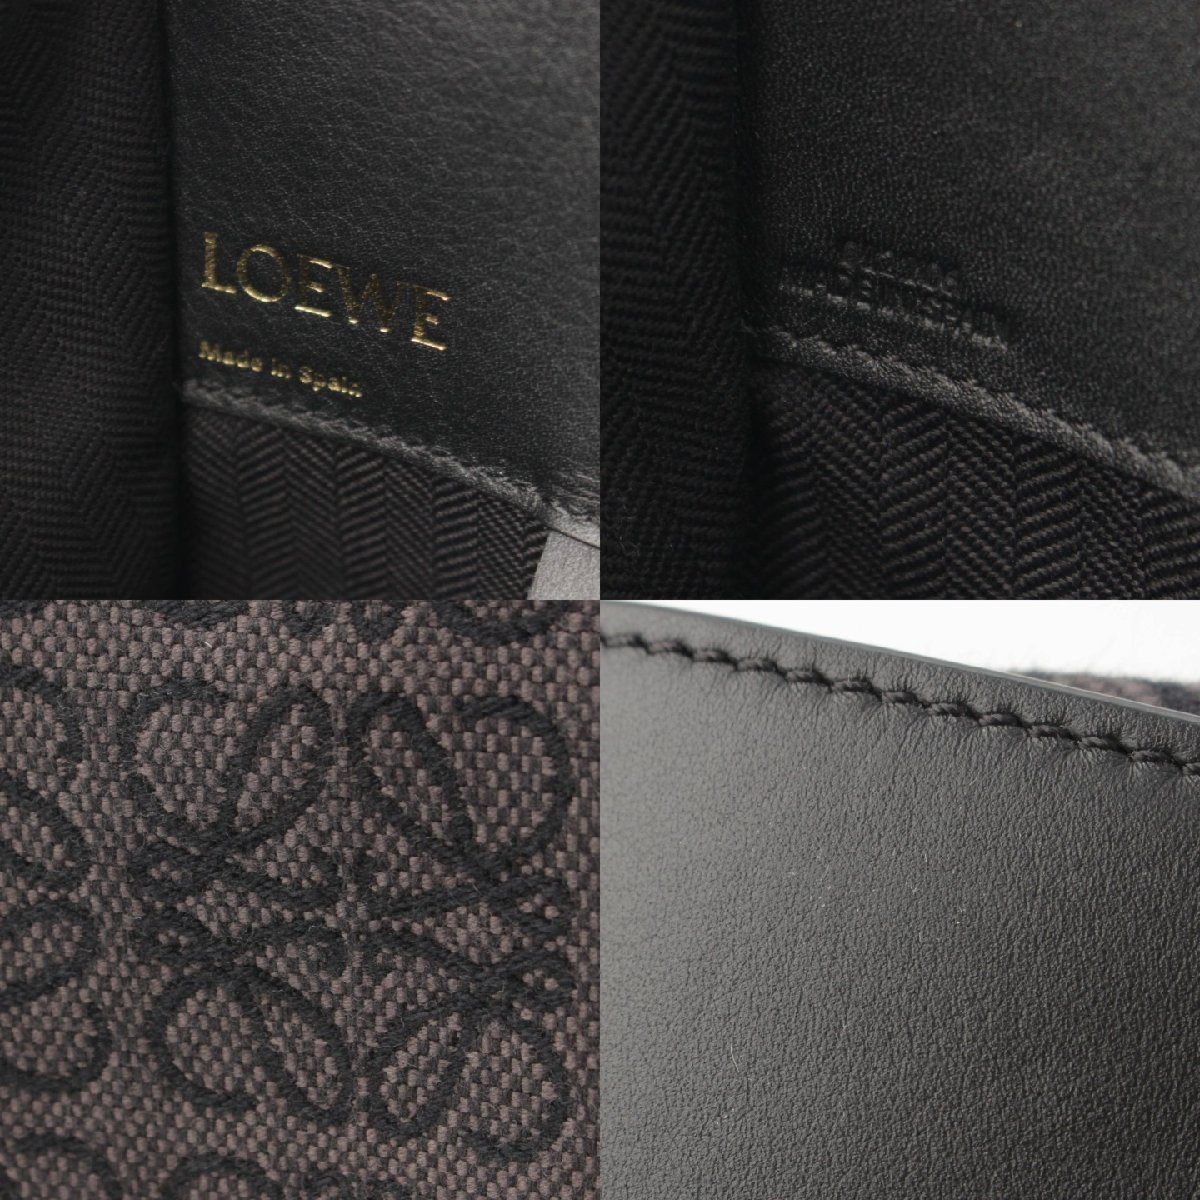 [ Loewe ]Loewe гамак маленький повтор дыра грамм ja карта сумка на плечо черный [ б/у ]185430